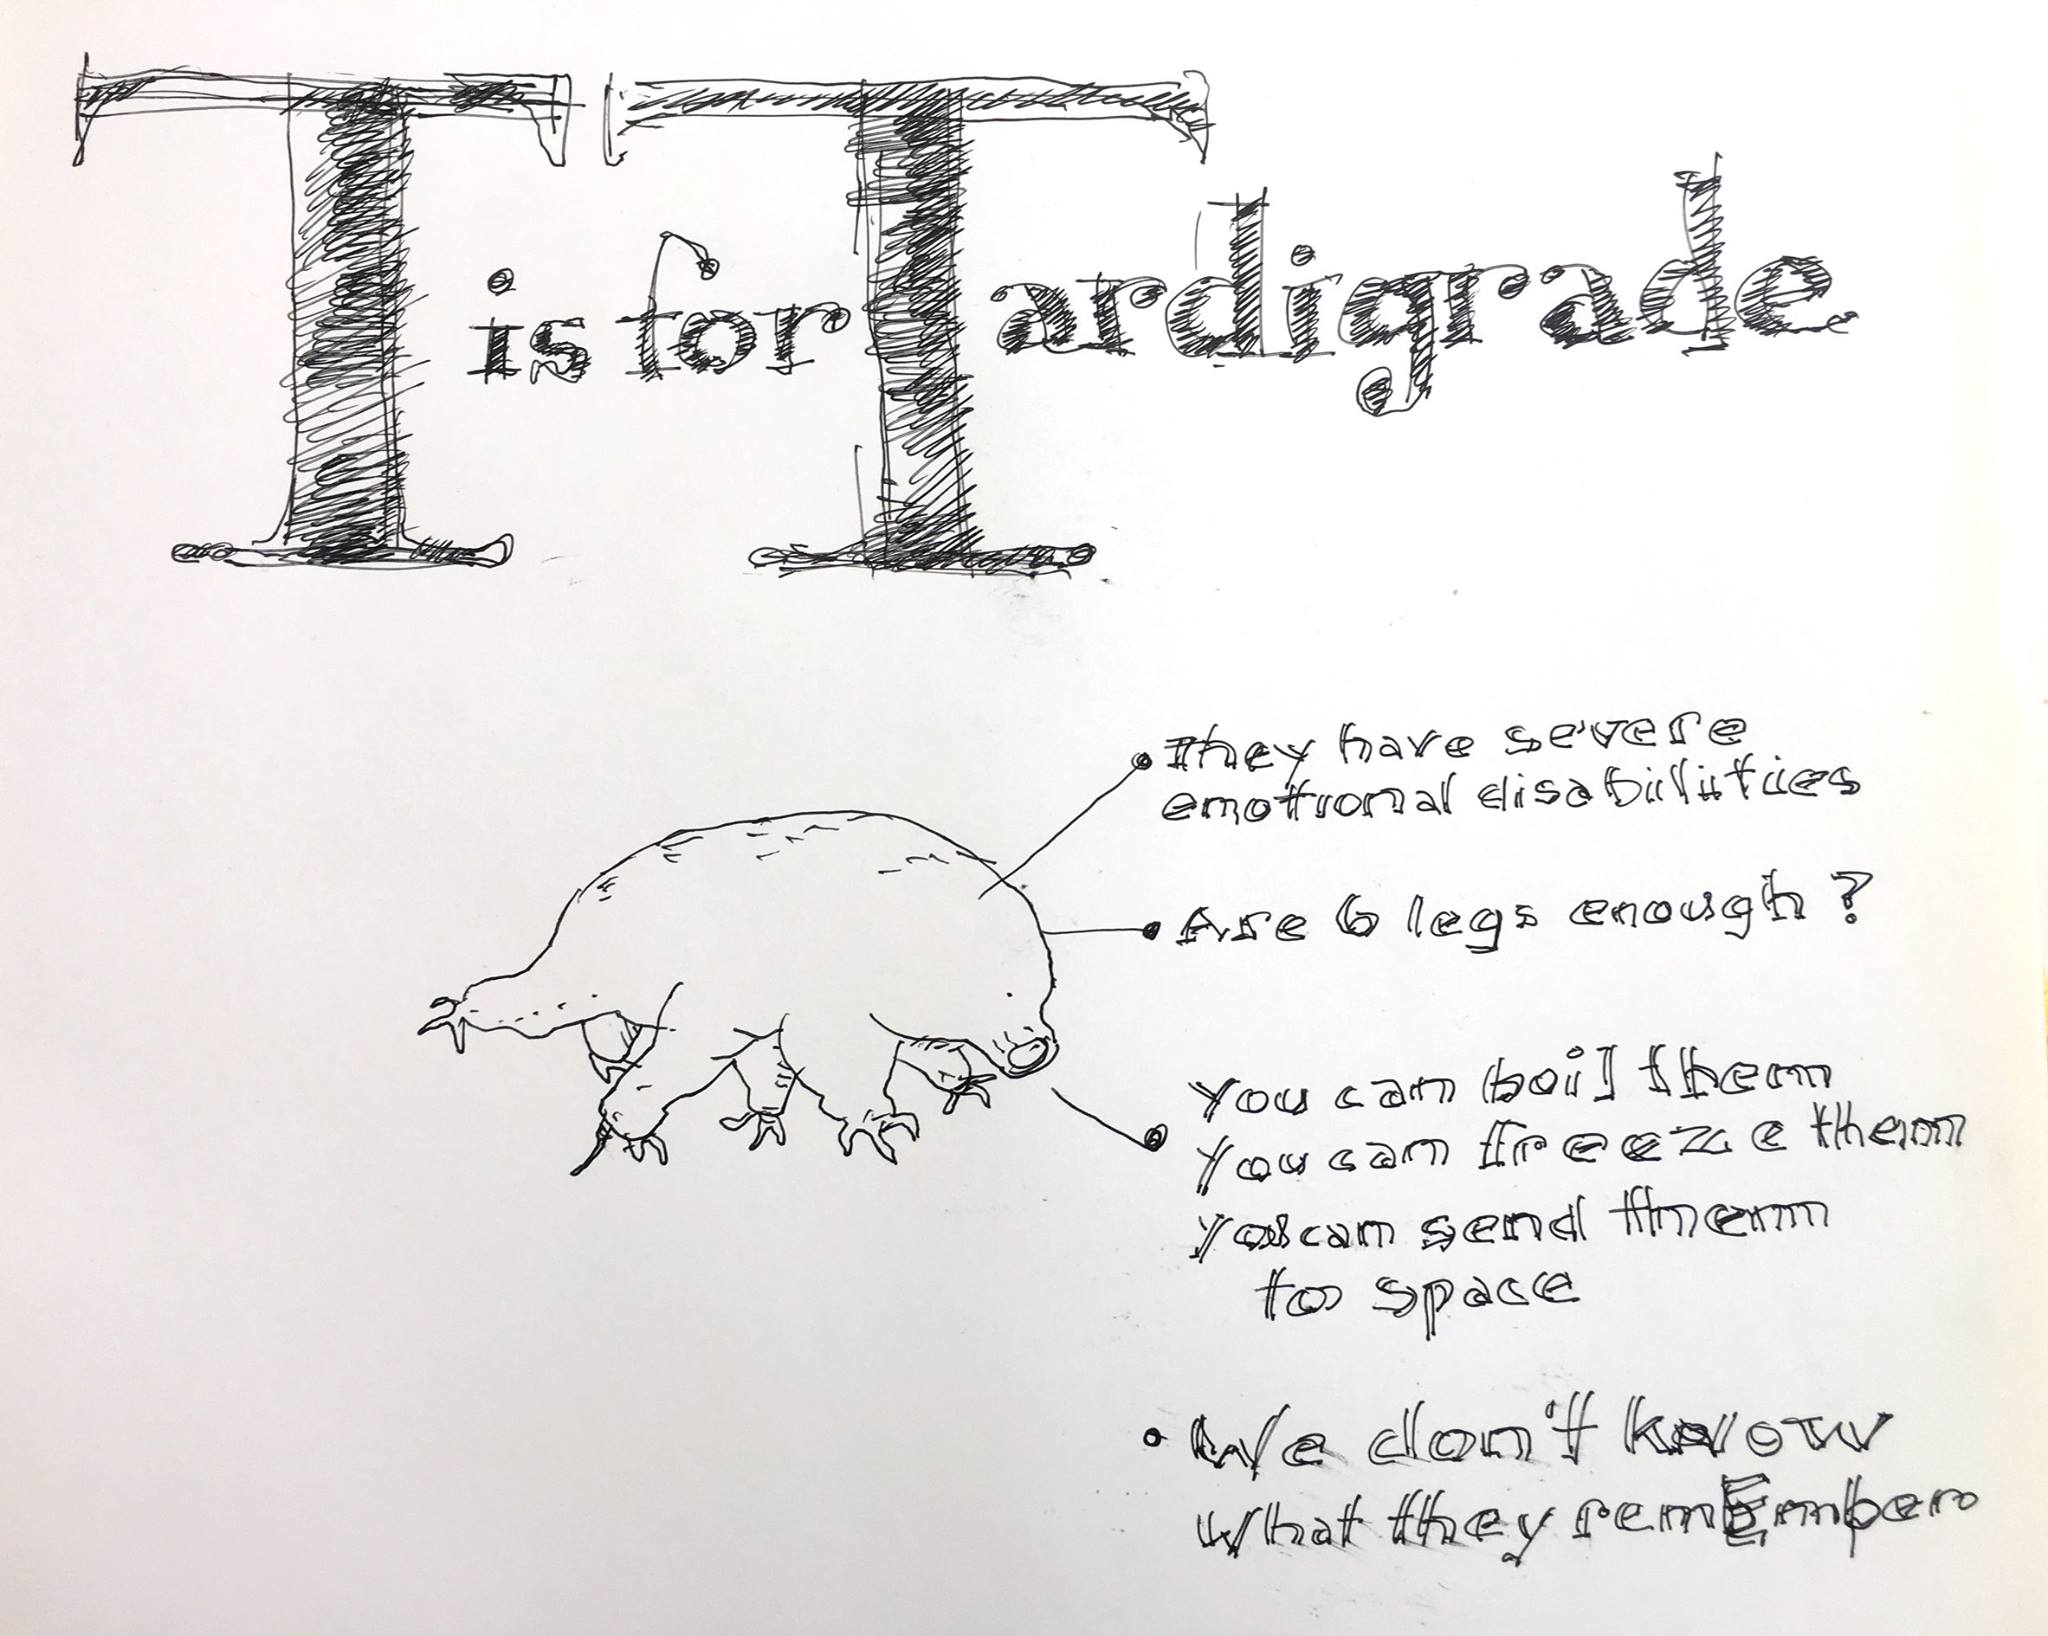 T is for tardigrade